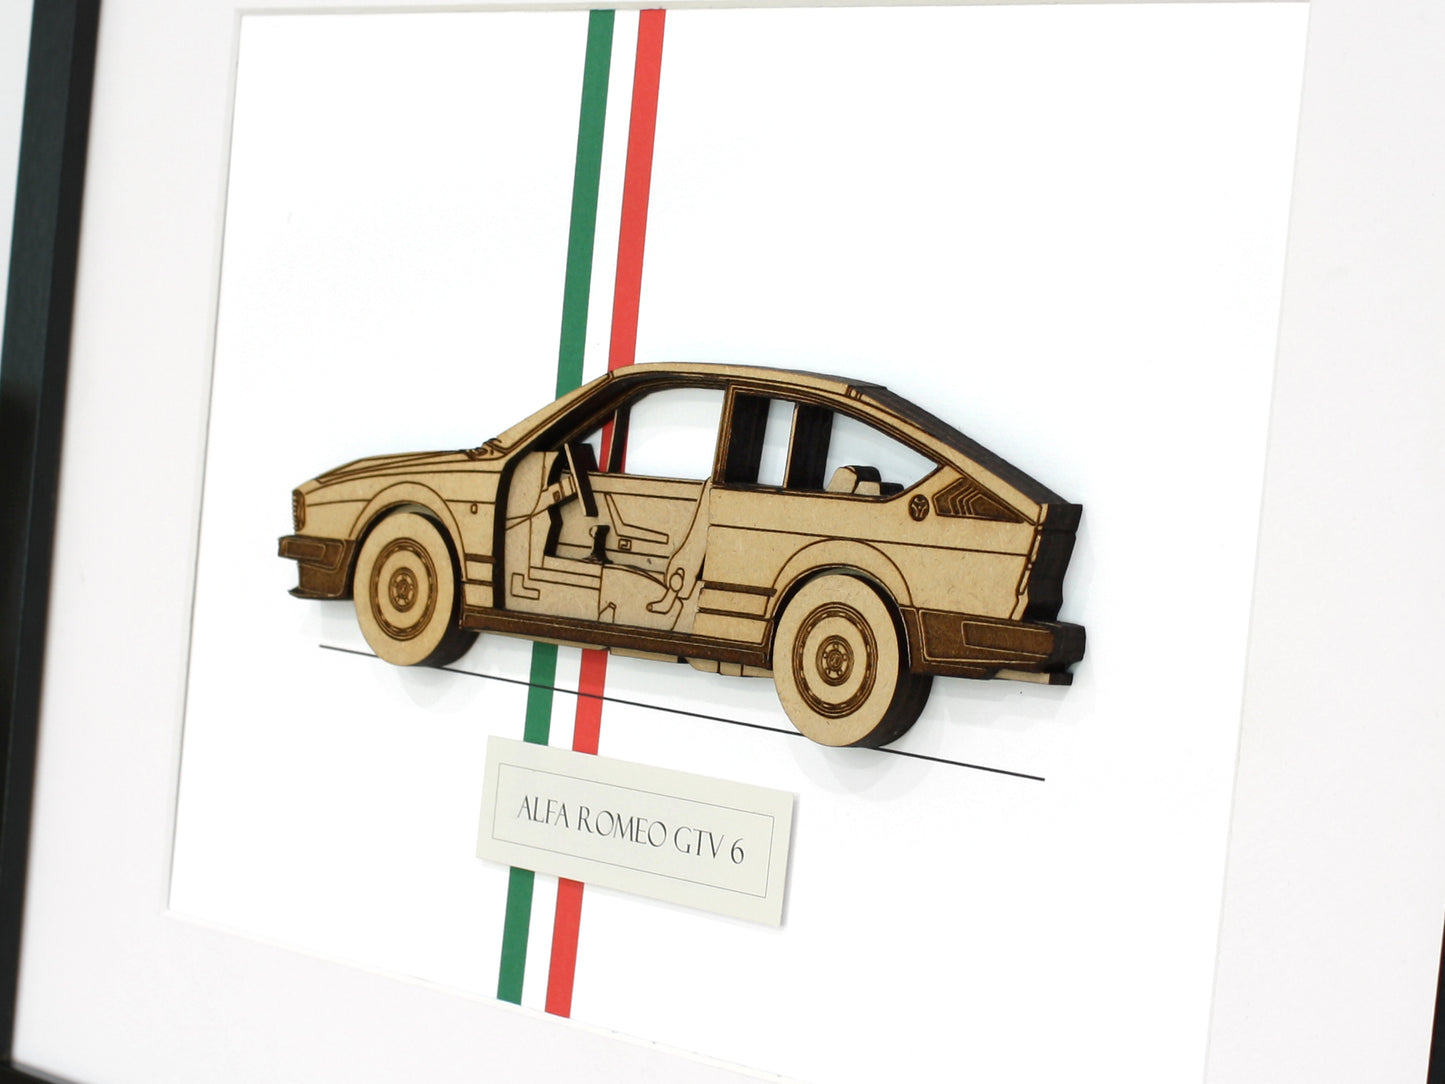 Alfa Romeo GTV6 gifts